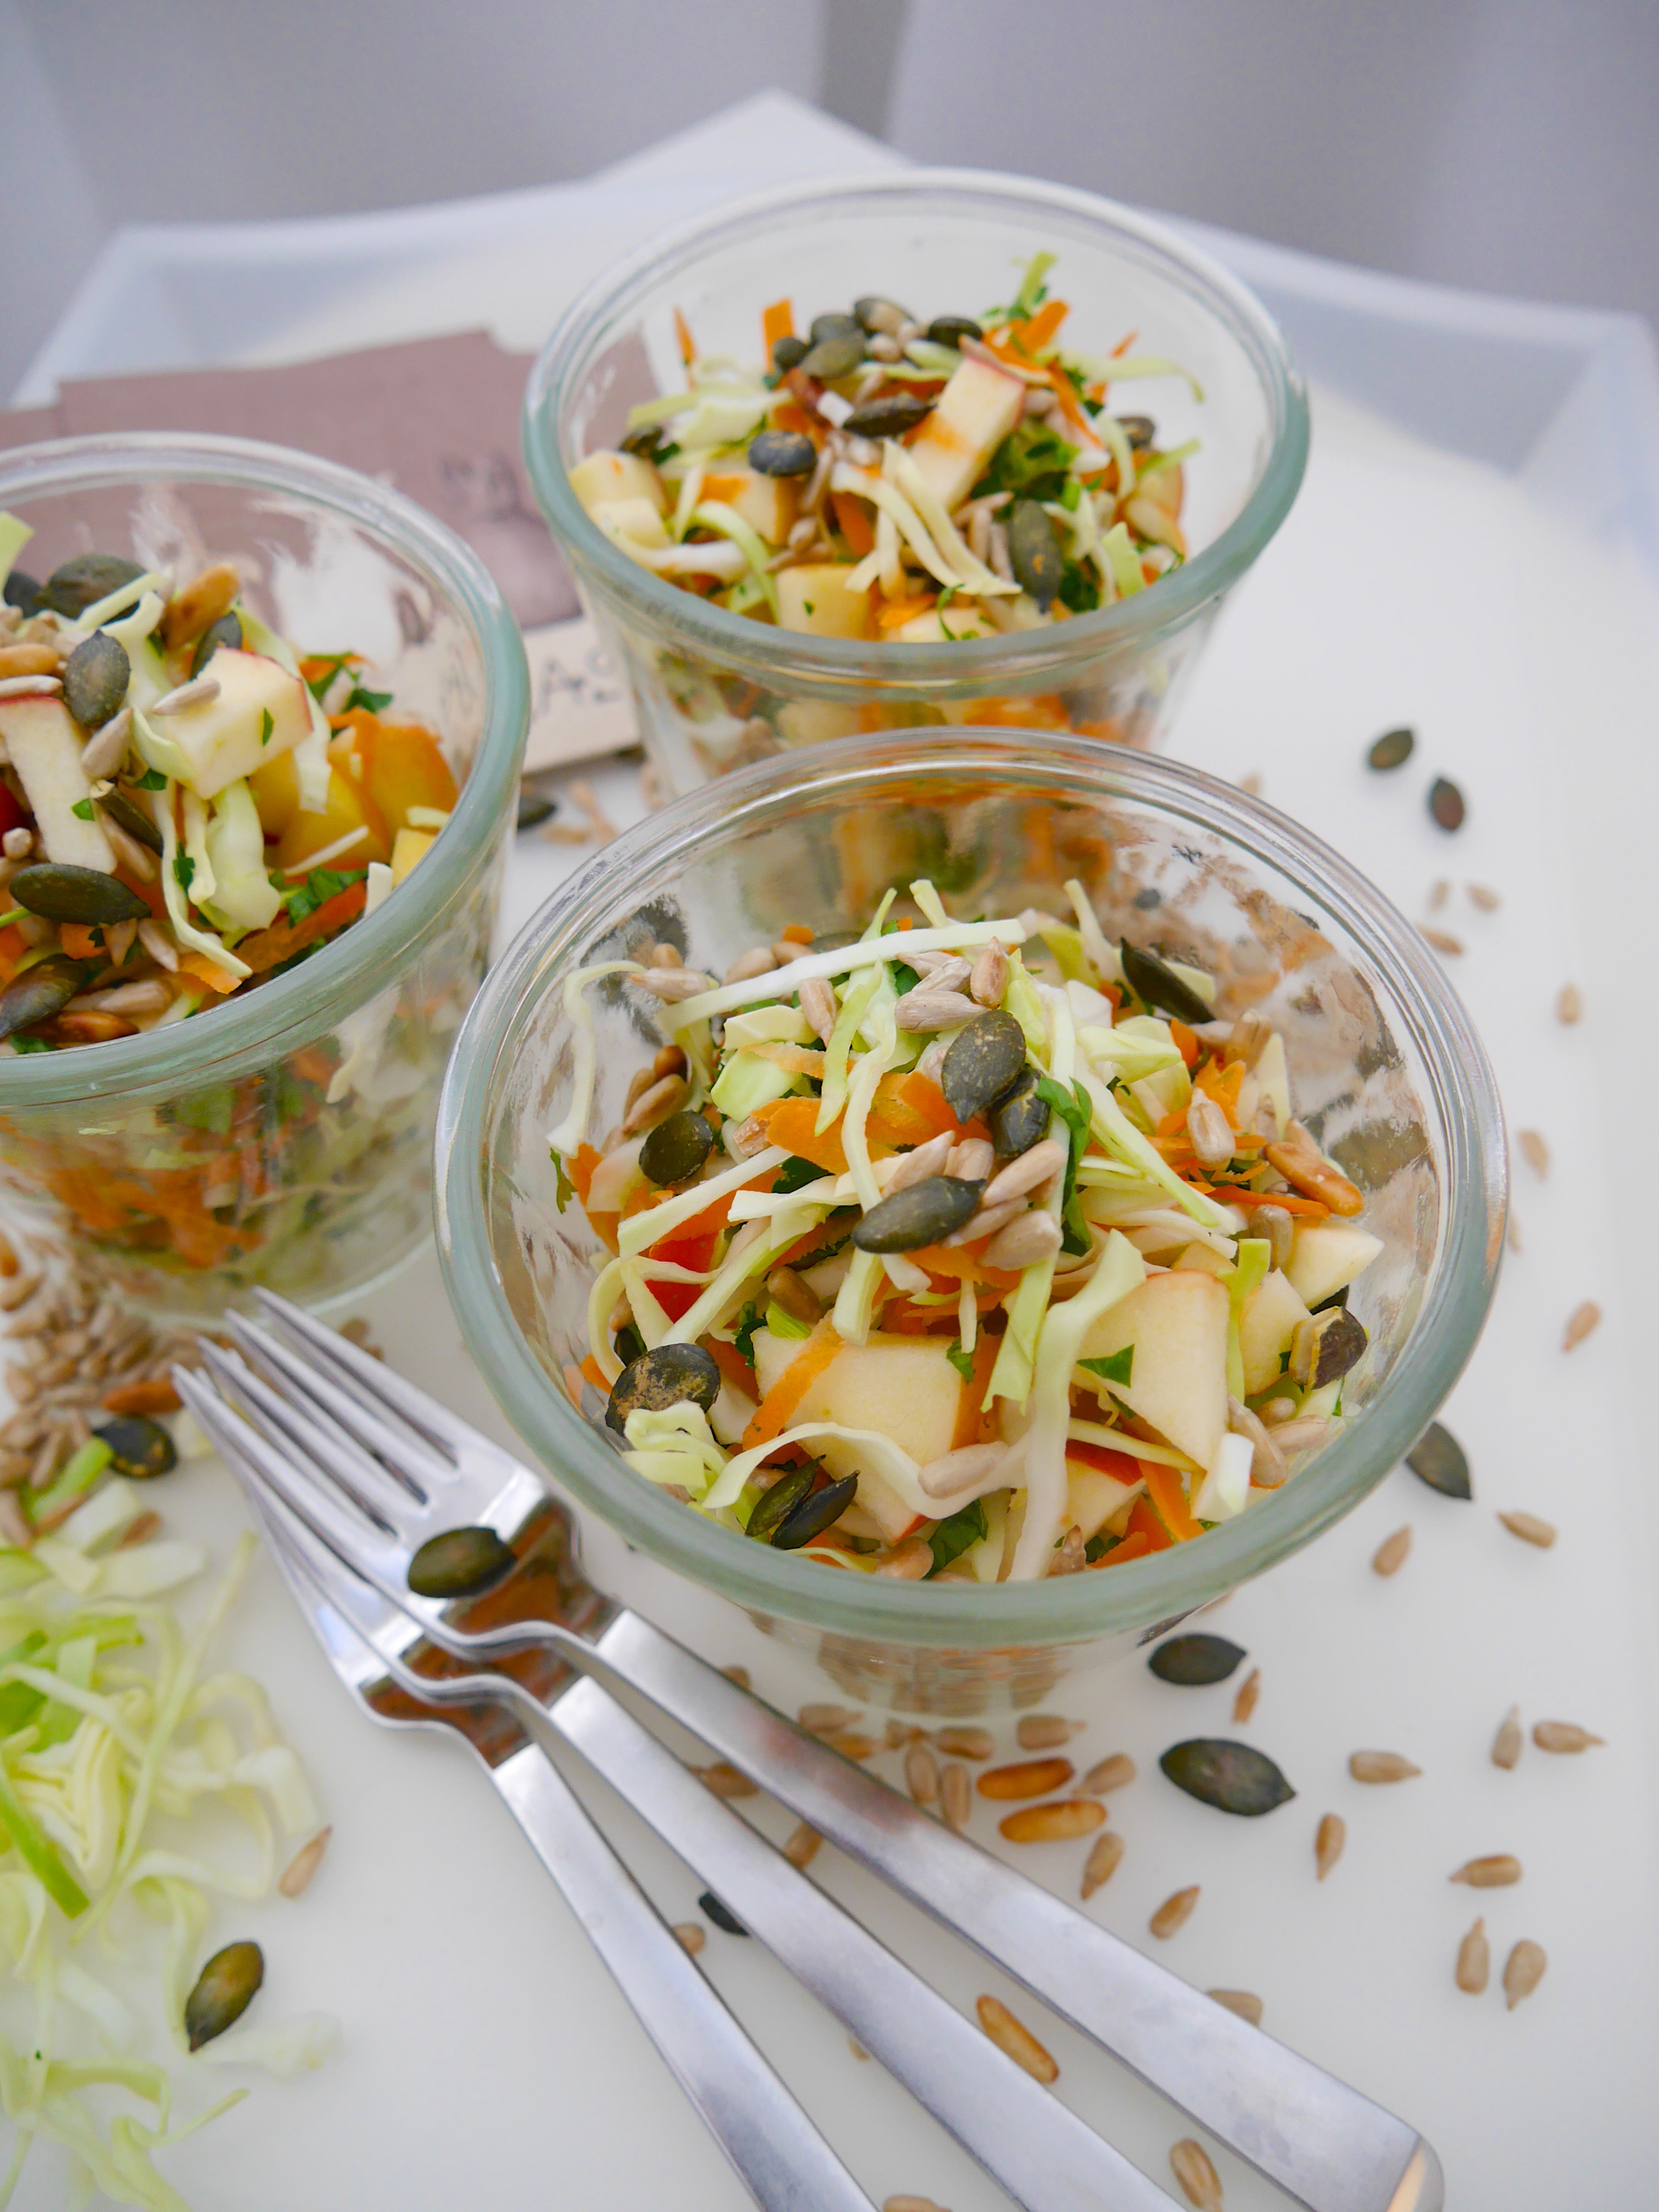 &amp;quot;Alexa Salad&amp;quot;: sauleckerer Spitzkohlsalat mit Möhre und Apfel - good ...